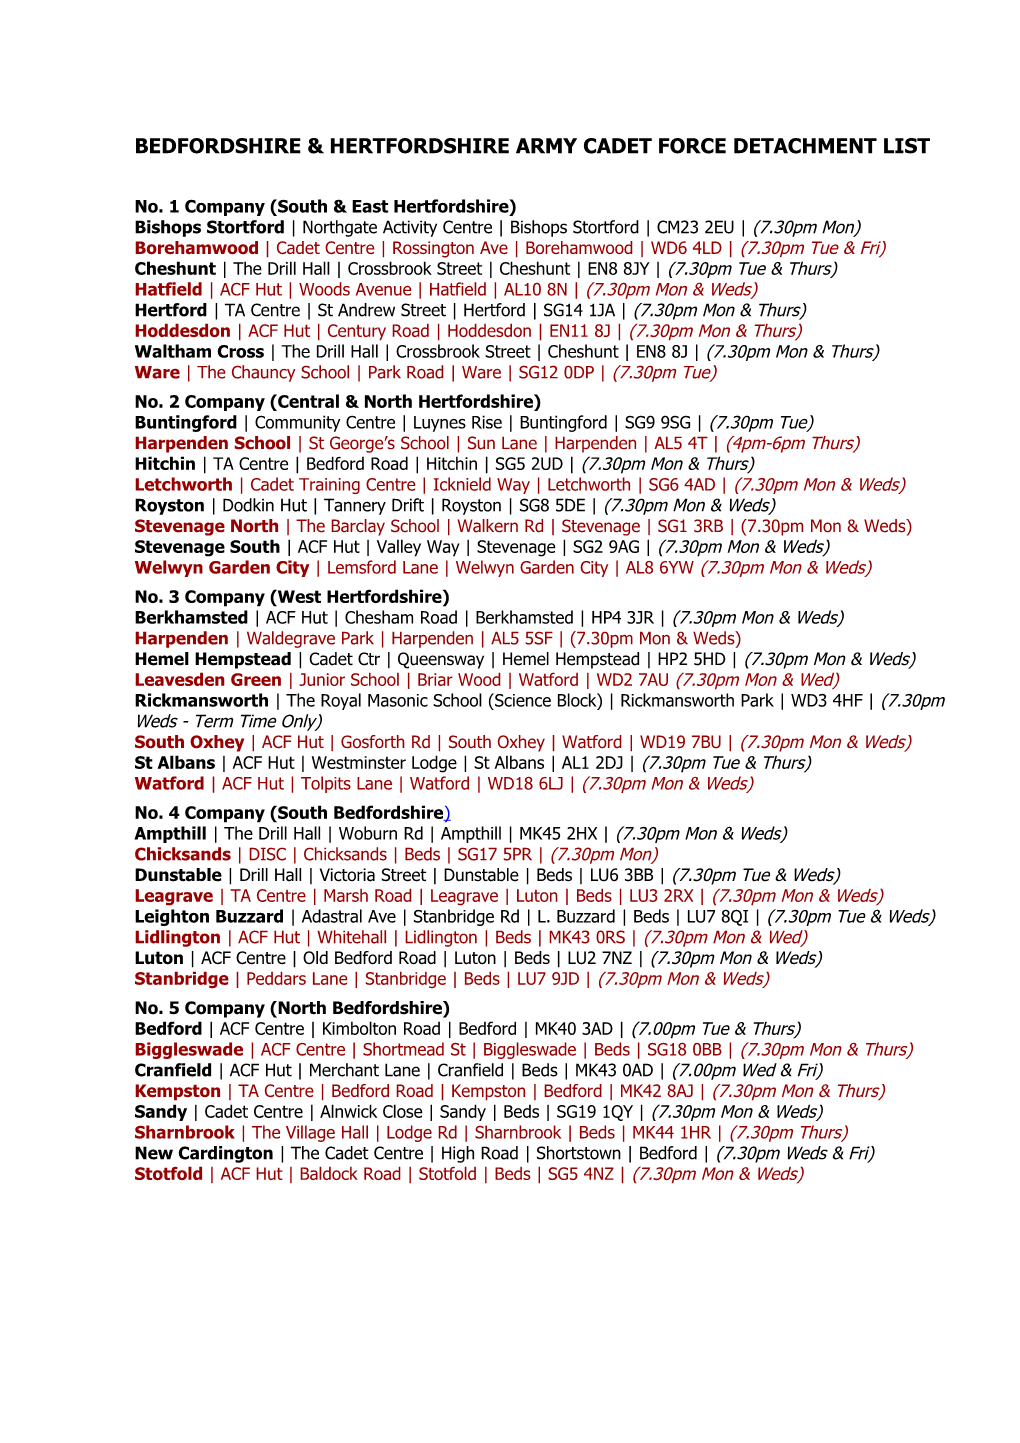 Bedfordshire & Hertfordshire Army Cadet Force Detachment List